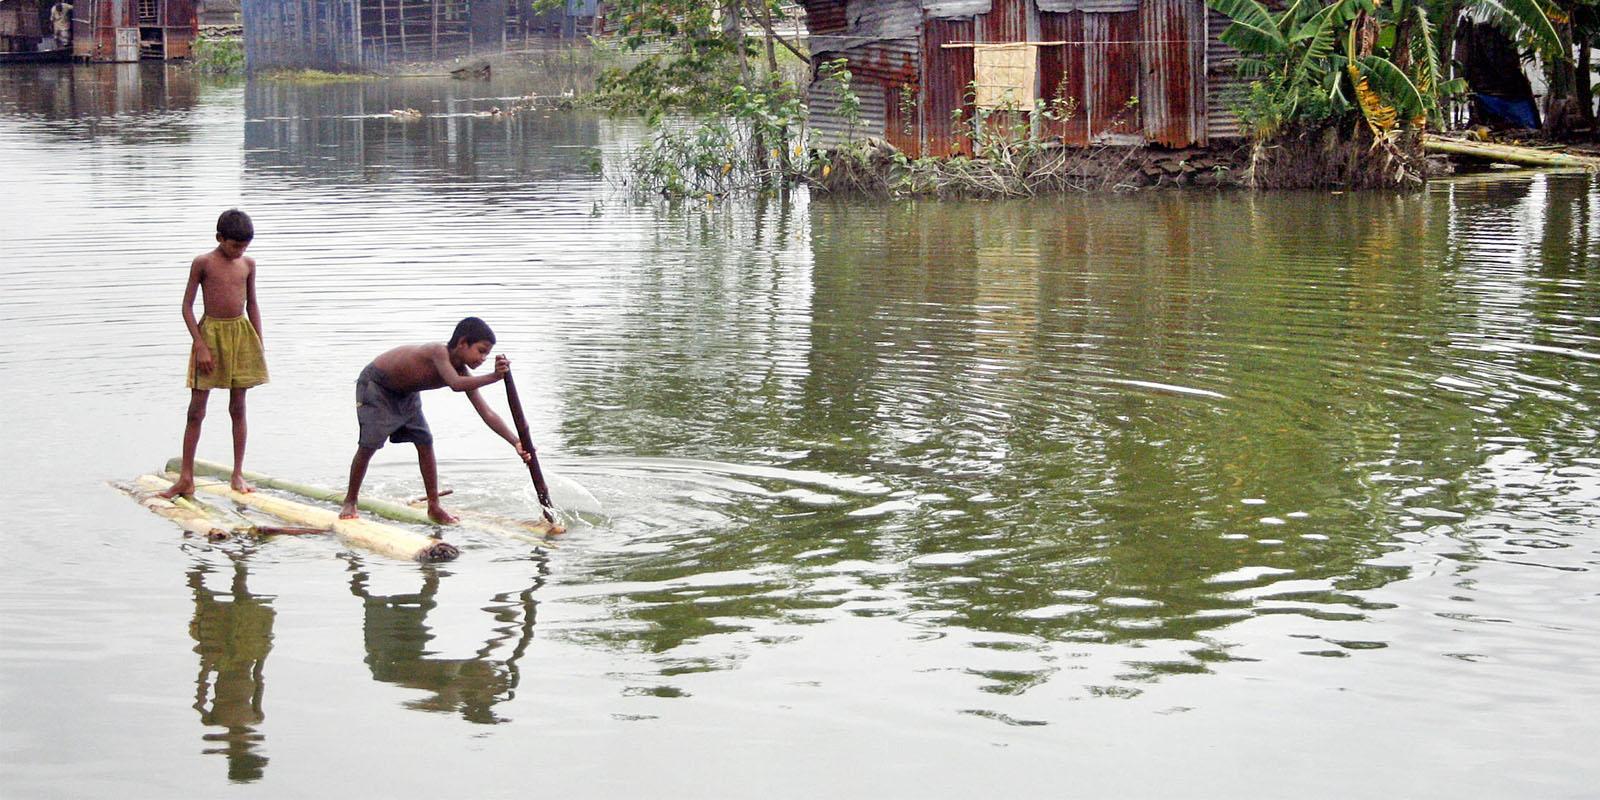 Boys on raft in flooded village.